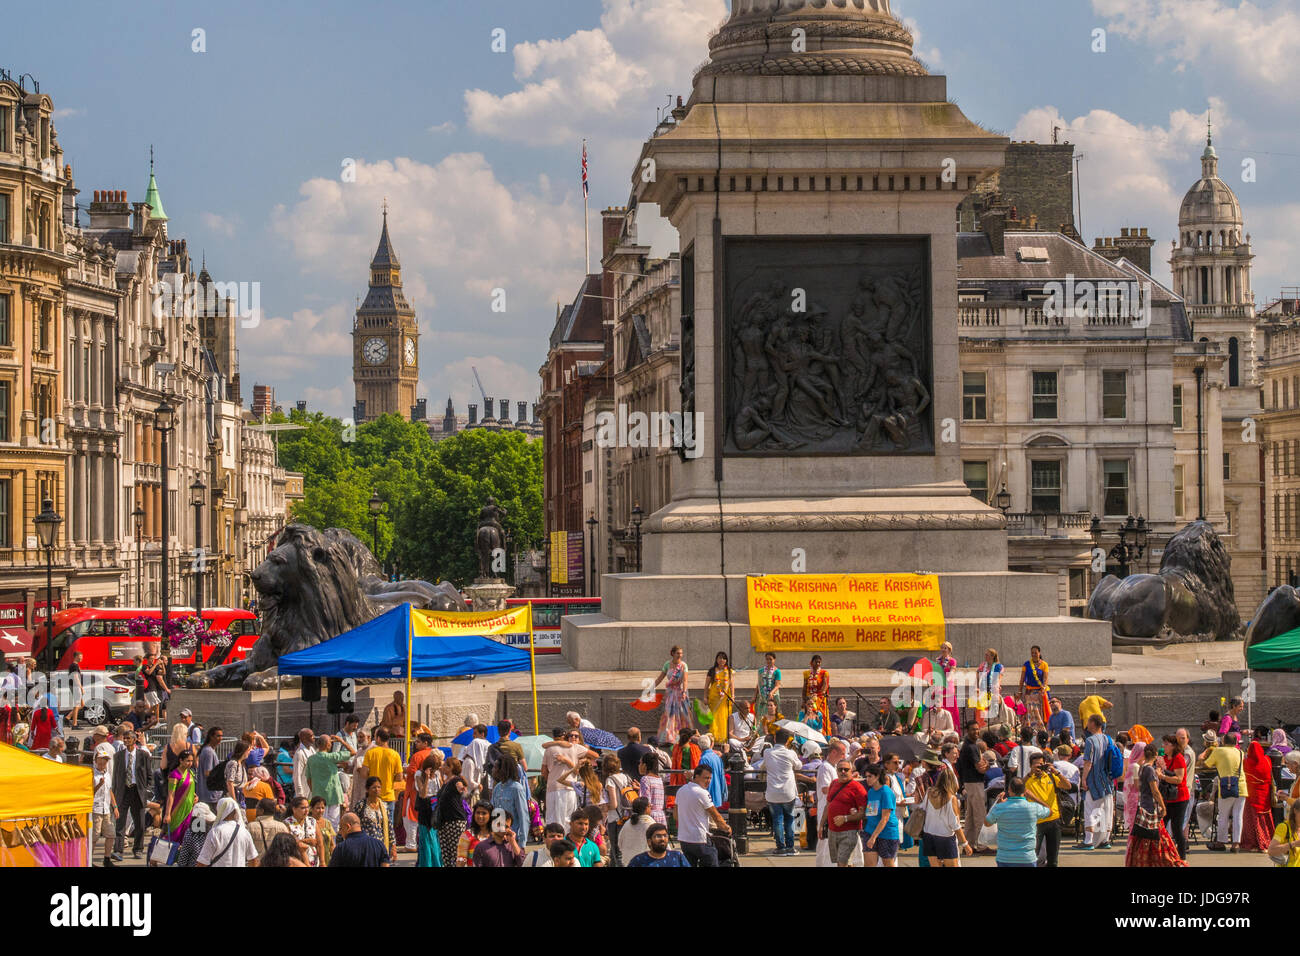 Festival de Hare Krishna, Trafalgar Square, Londres, Angleterre. Banque D'Images